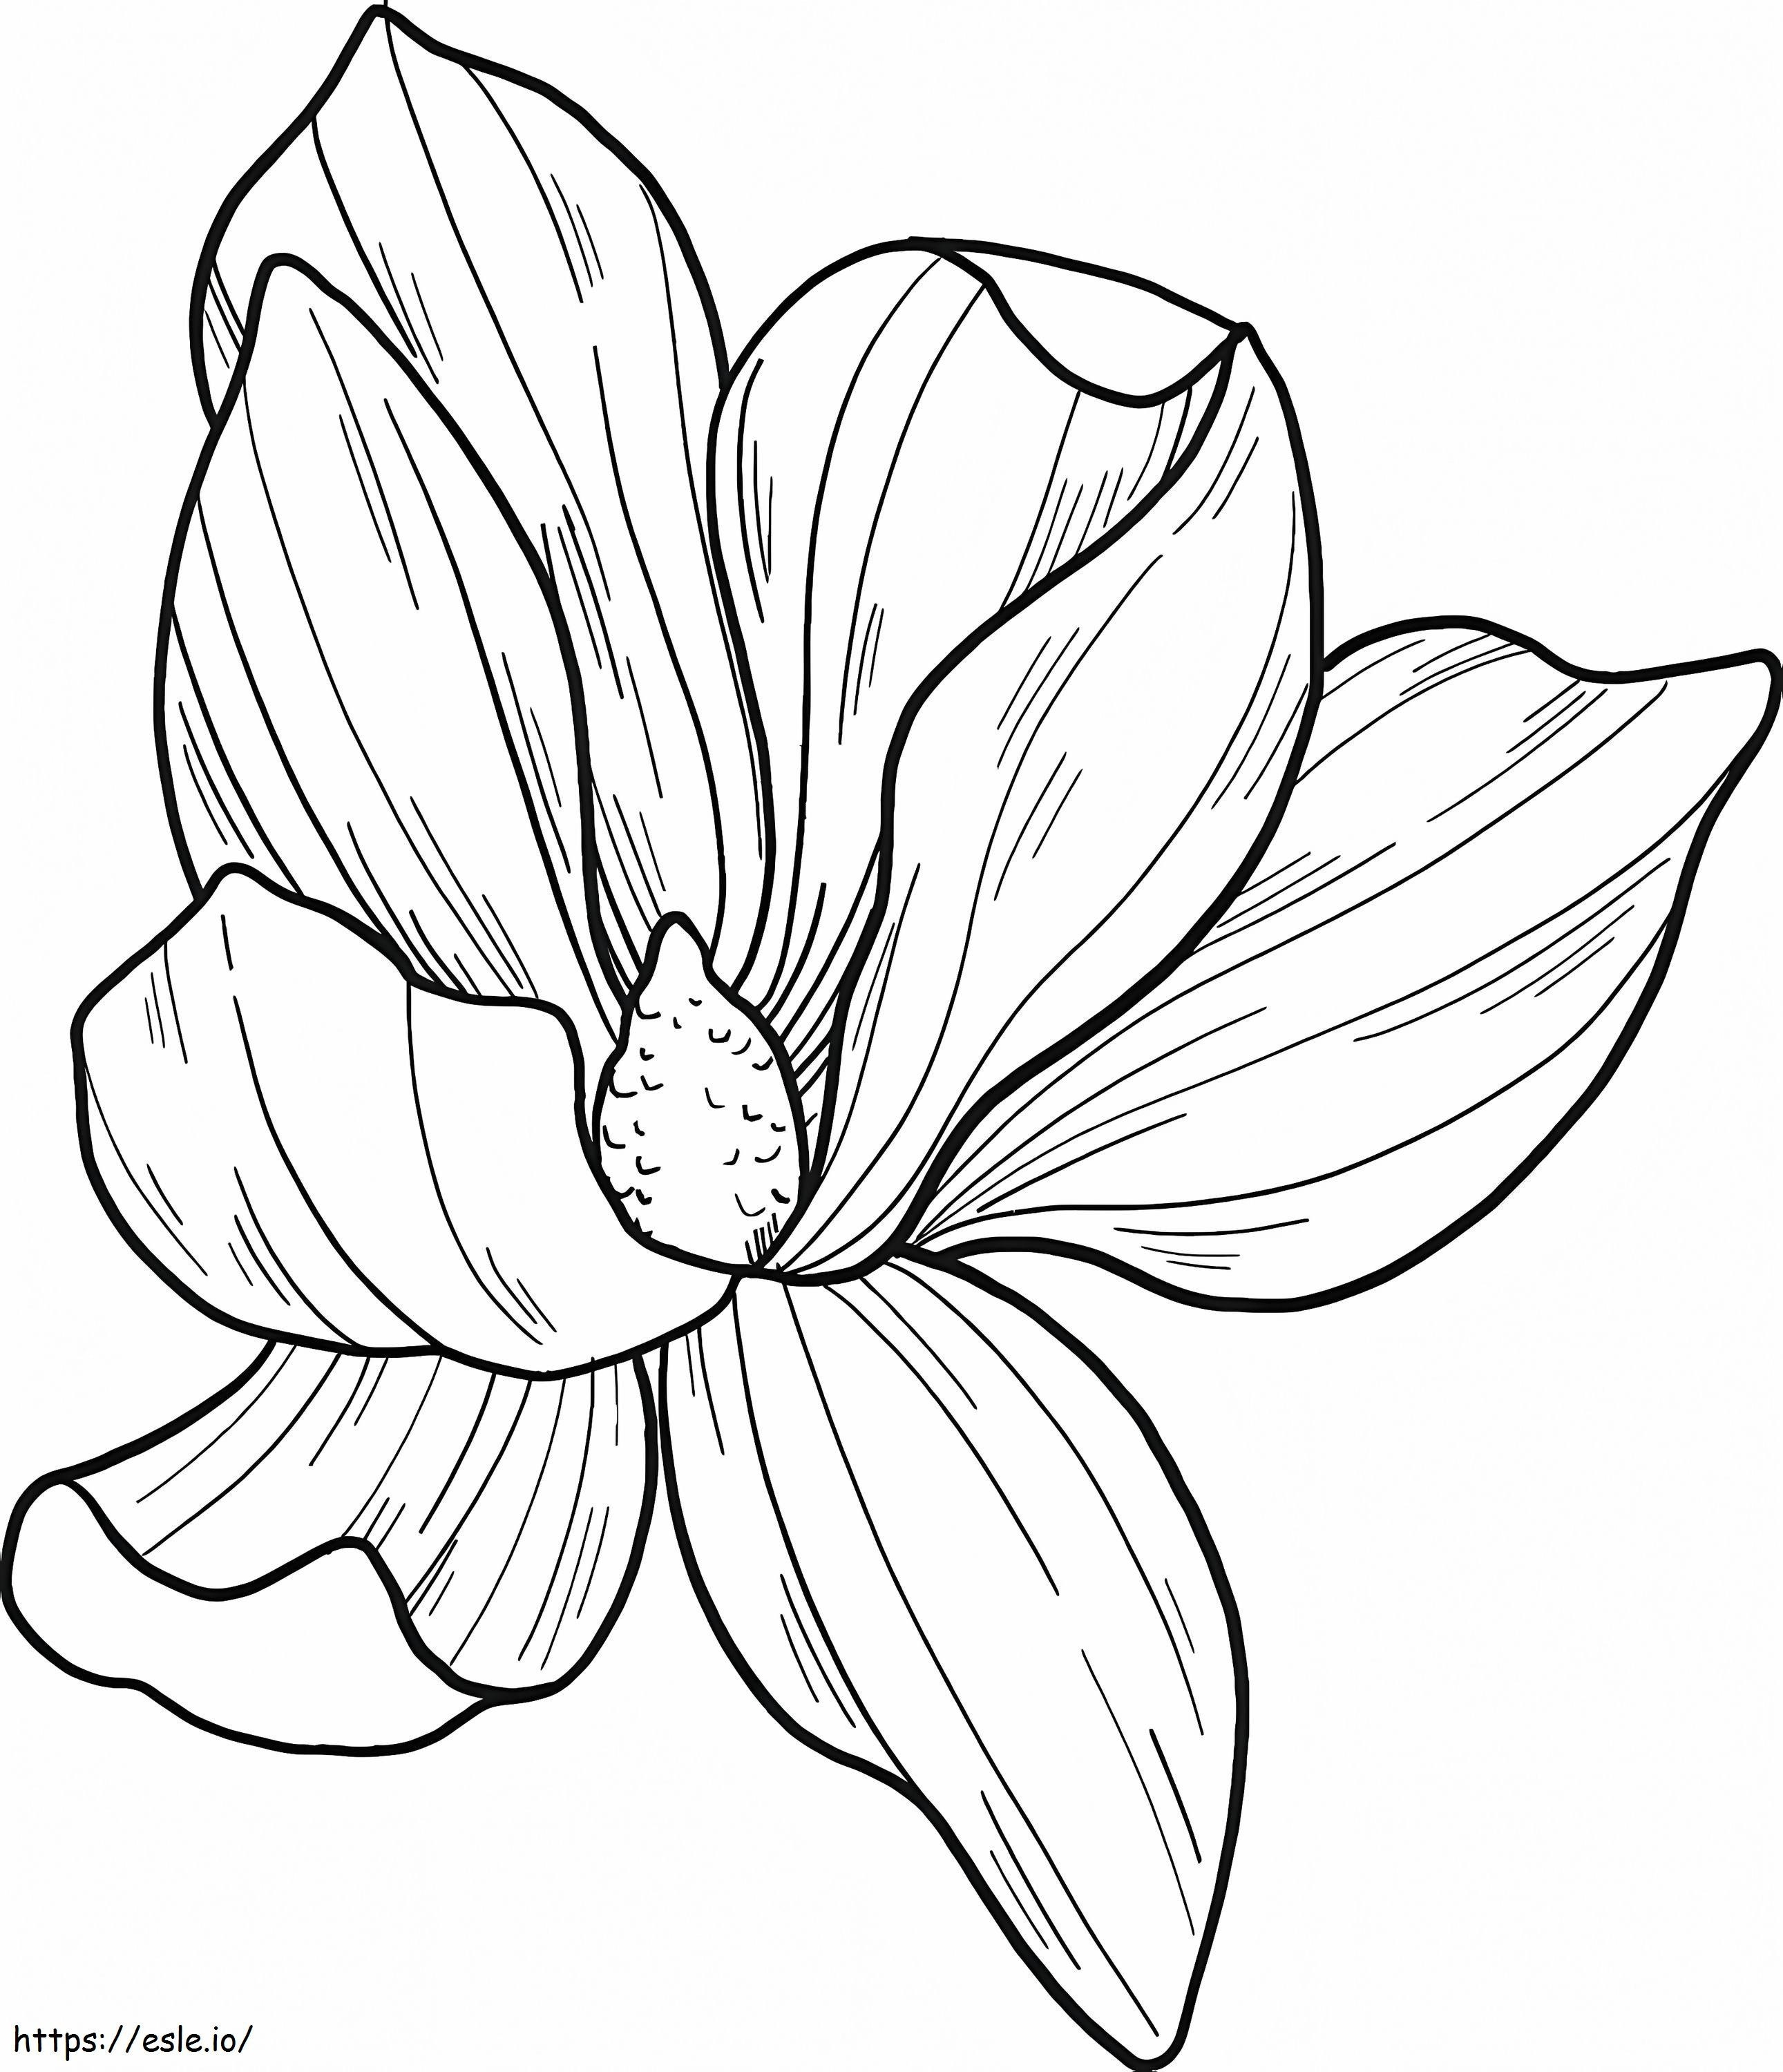 Magnoliabloem 1 kleurplaat kleurplaat